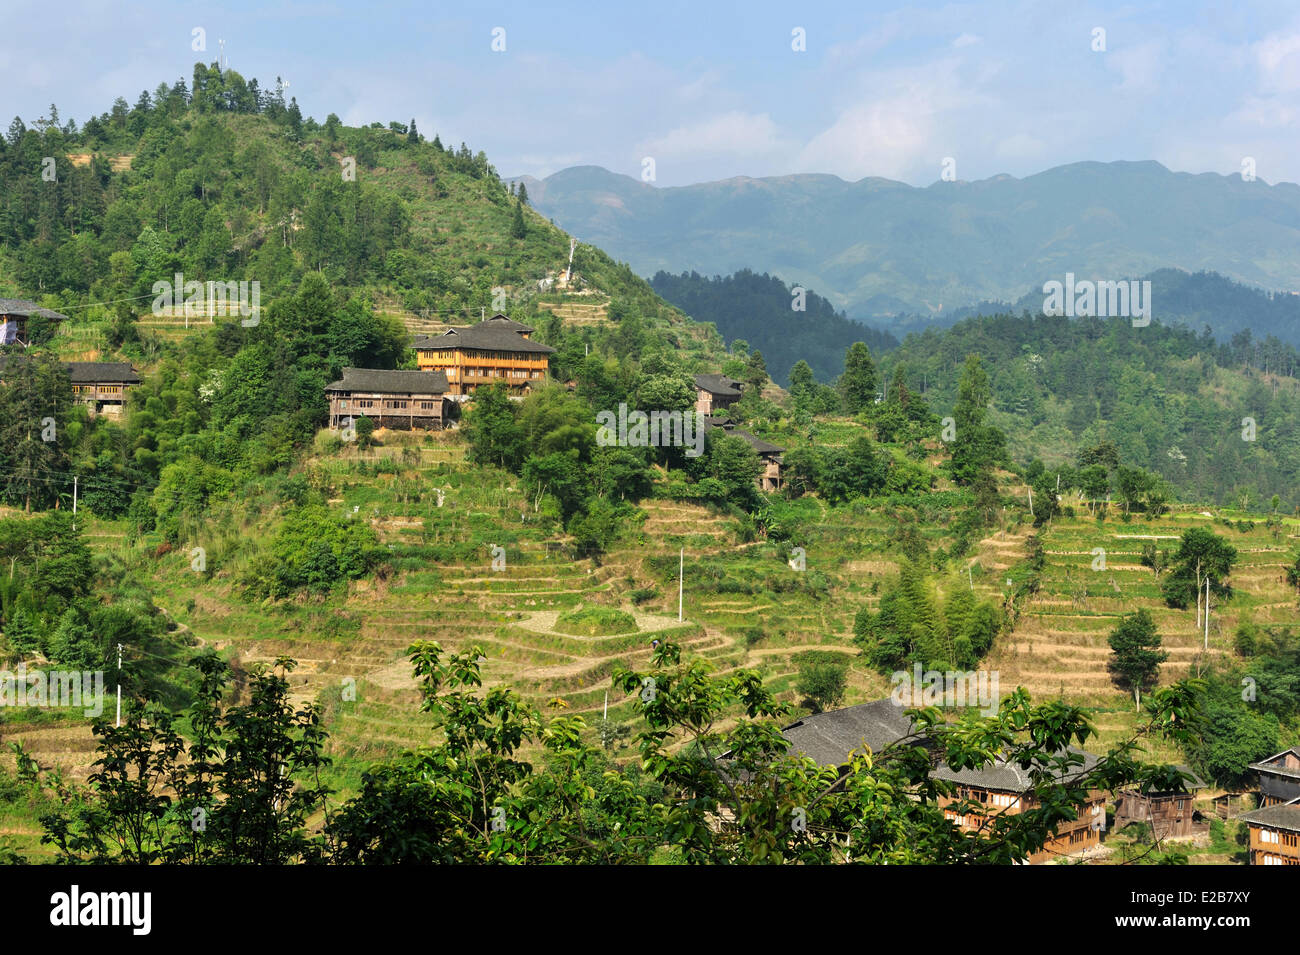 China, Guangxi Province, Longsheng, rice terraces at Longji, Dazhai village Stock Photo